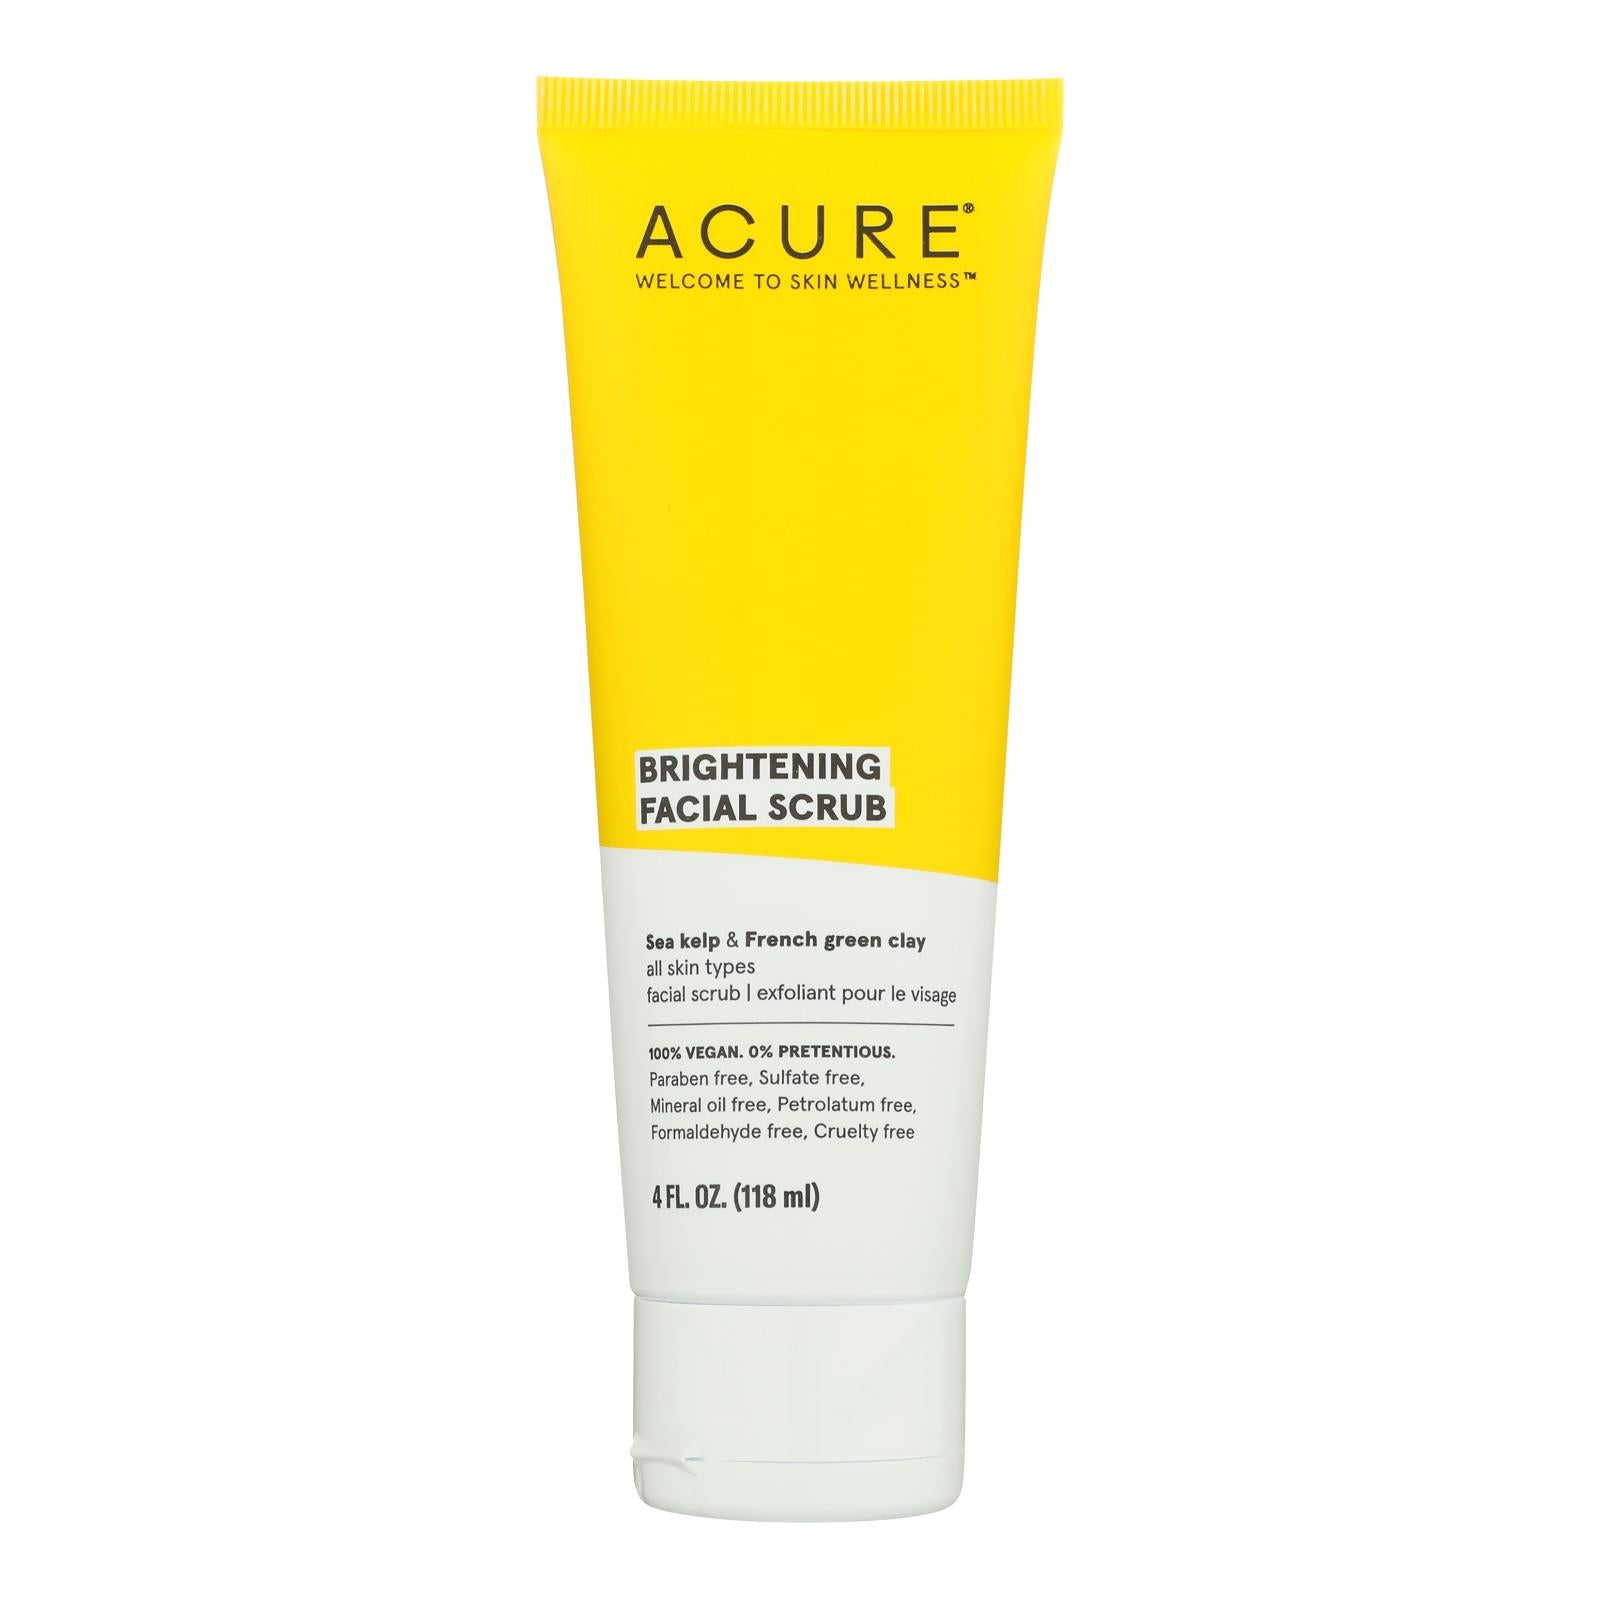 Acure - Brightening Facial Scrub - Argan Extract And Chlorella - 4 Fl Oz.